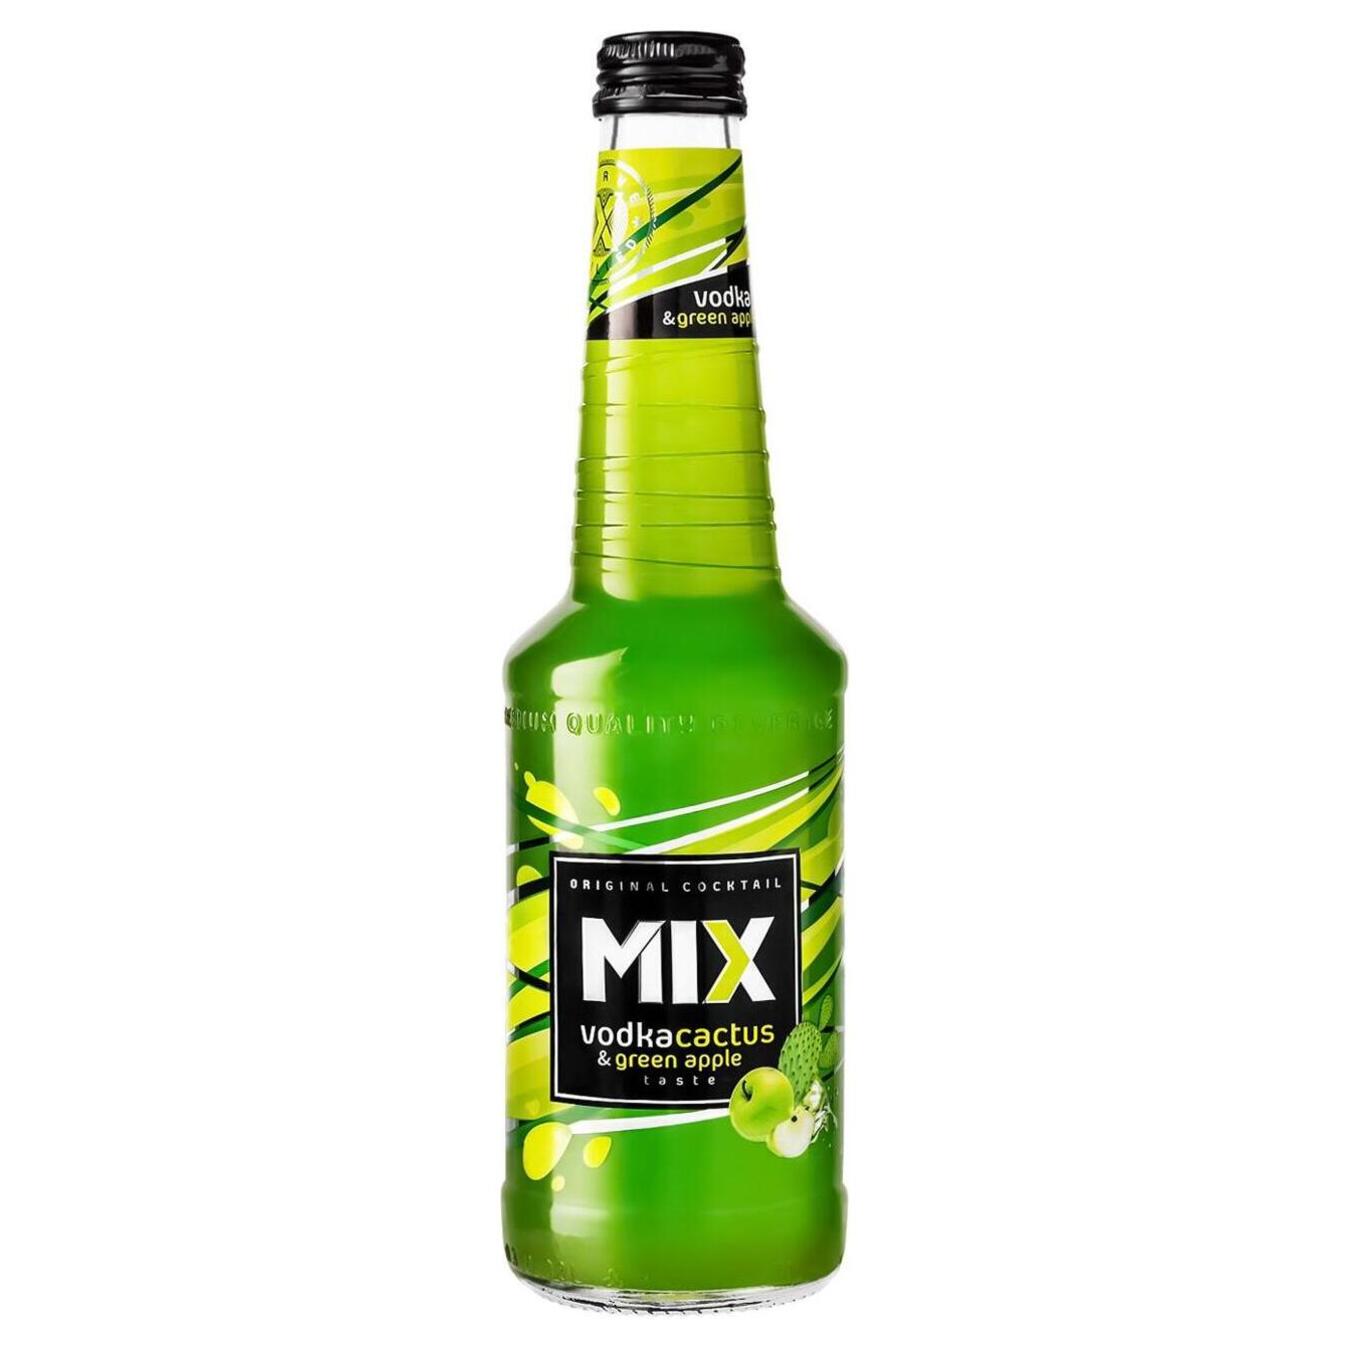 Low-alcohol drink MIX vodka green apple cactus 4% 0.33l glass